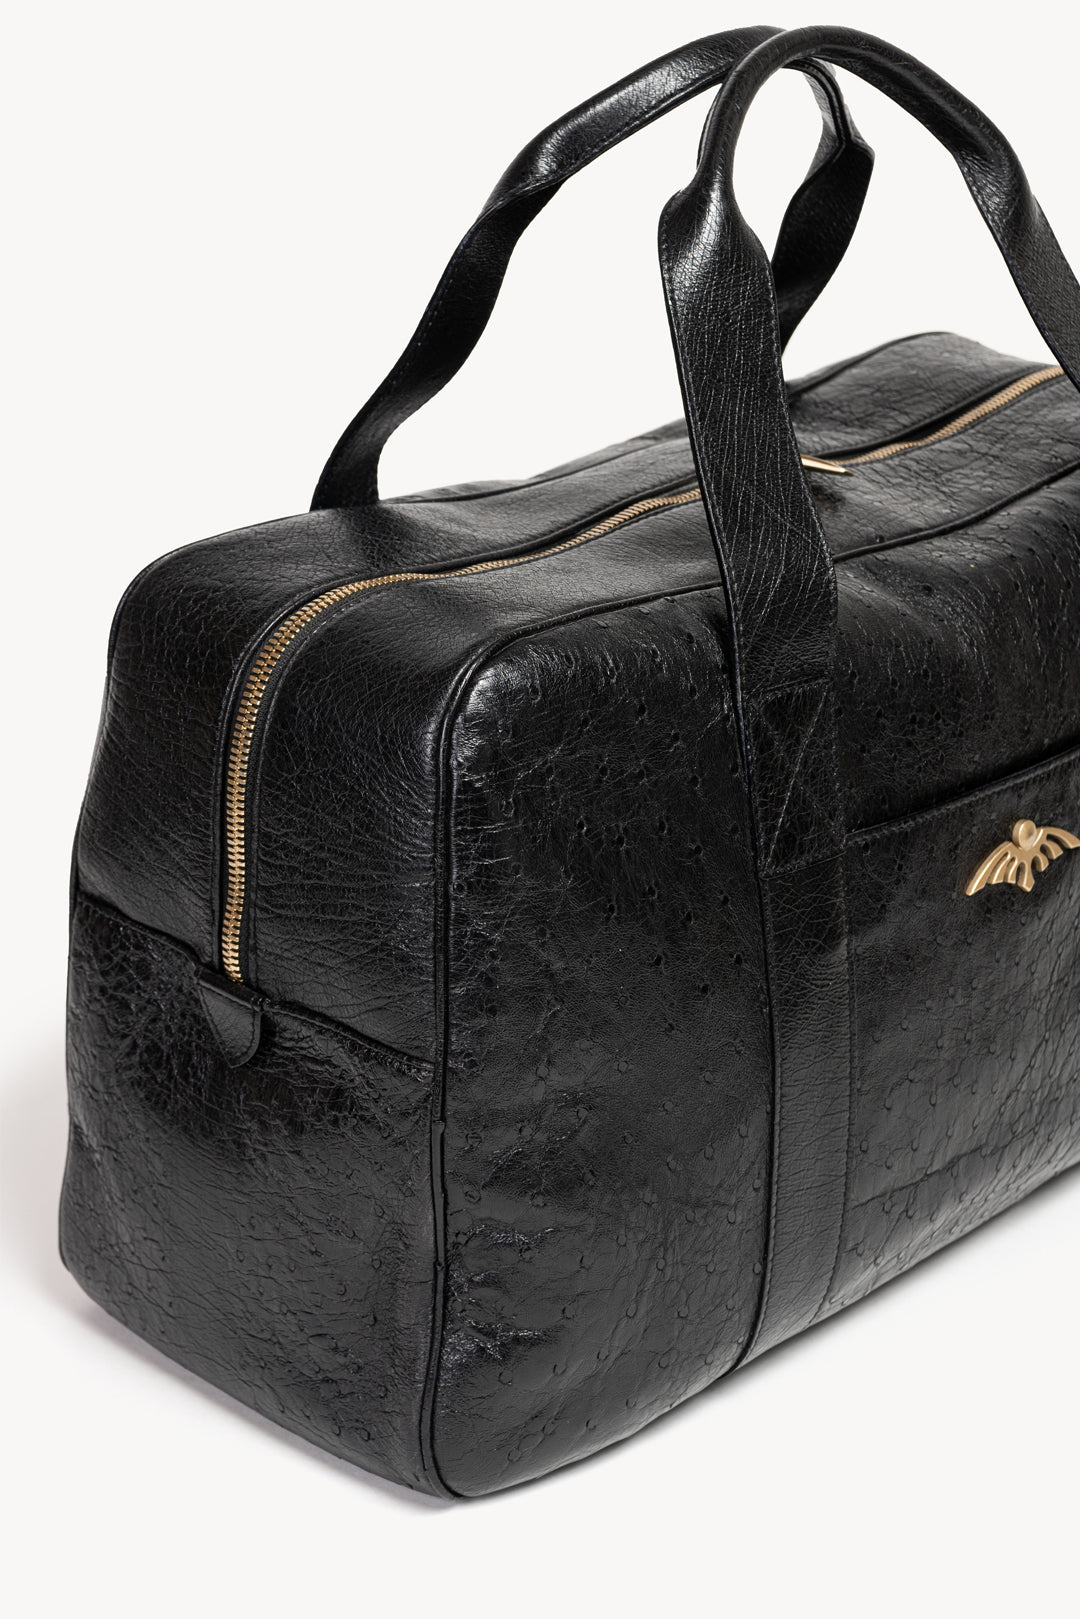 Travel bag with handles - Black